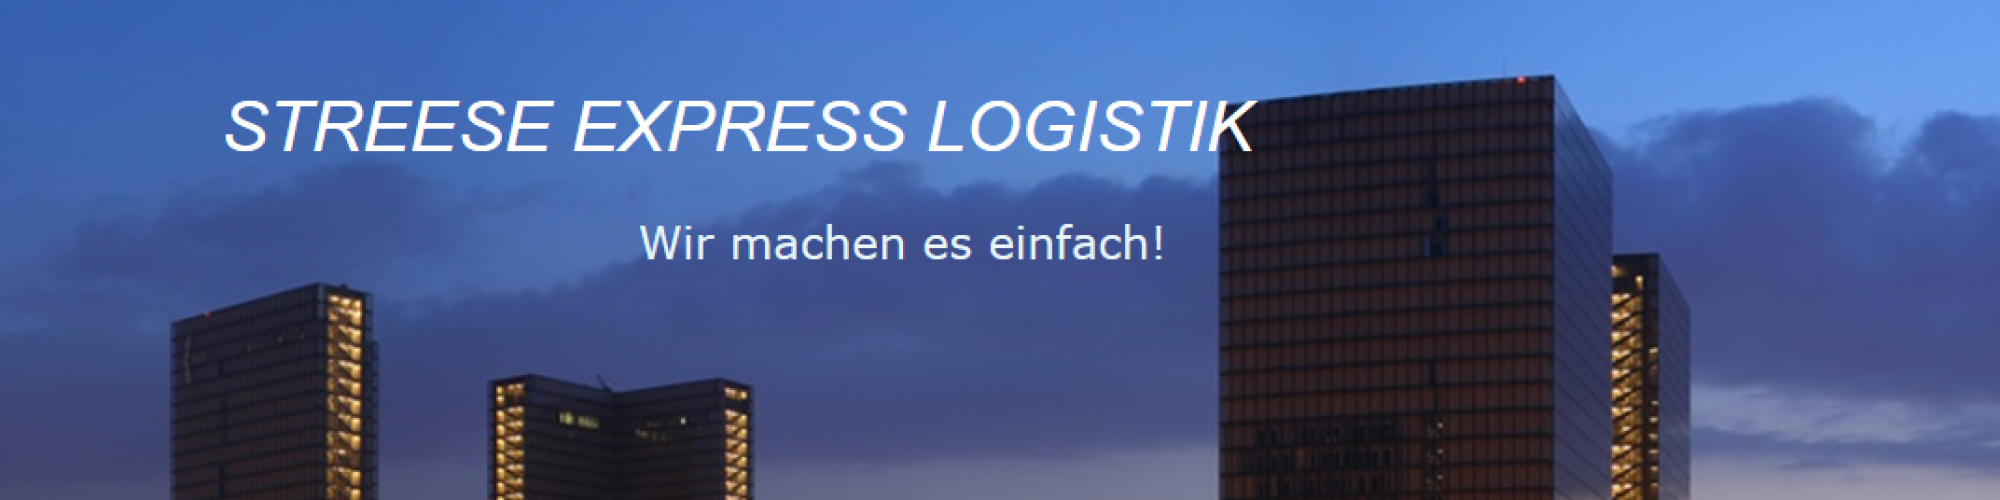 Sven Streese Express Logistik